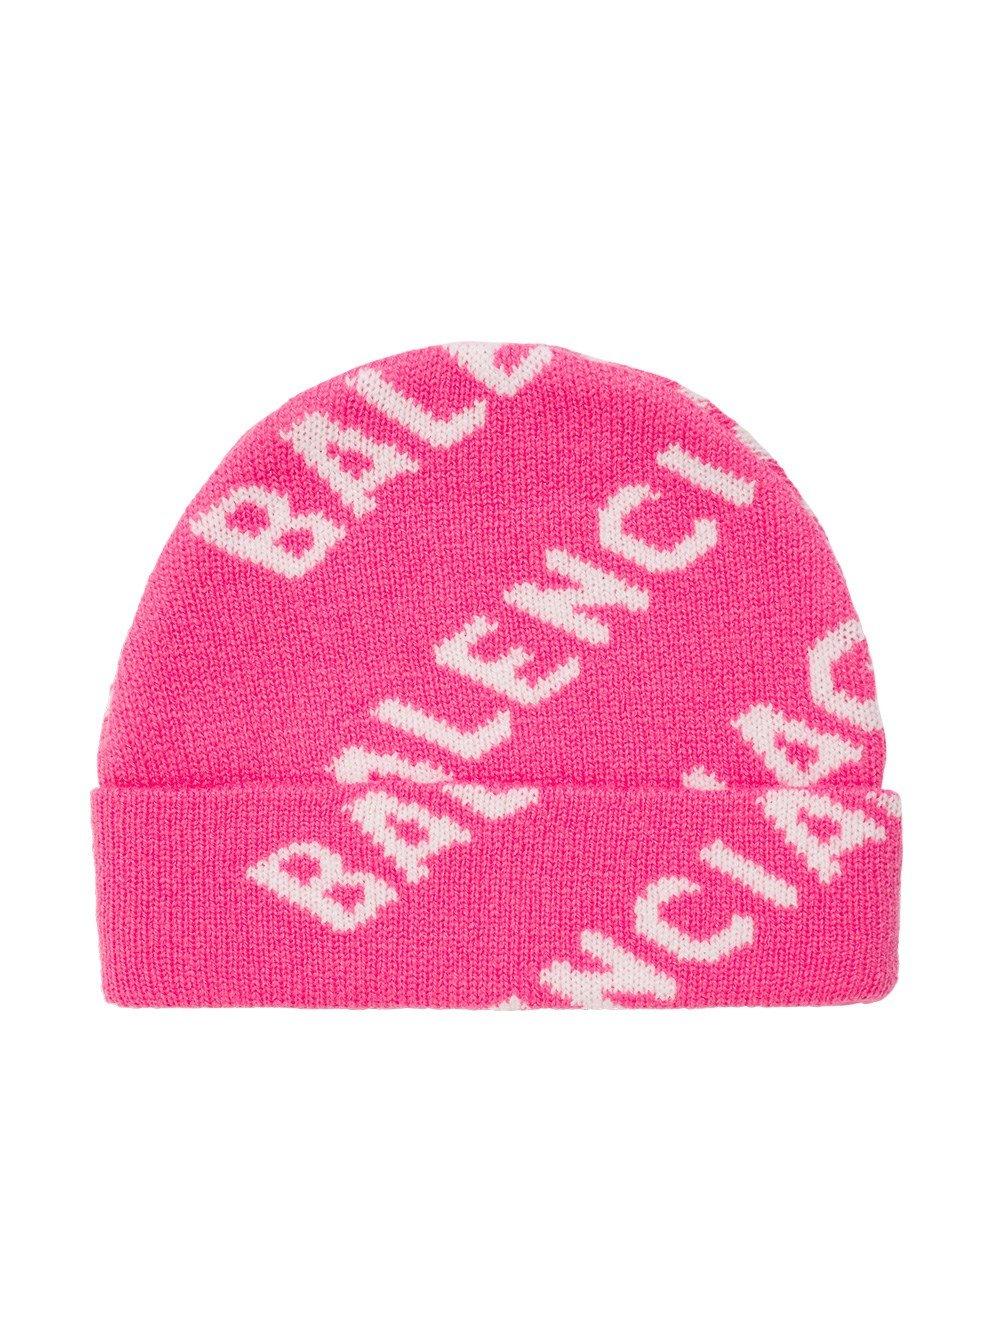 Balenciaga Intarsia Wool-blend Beanie in Pink | Lyst